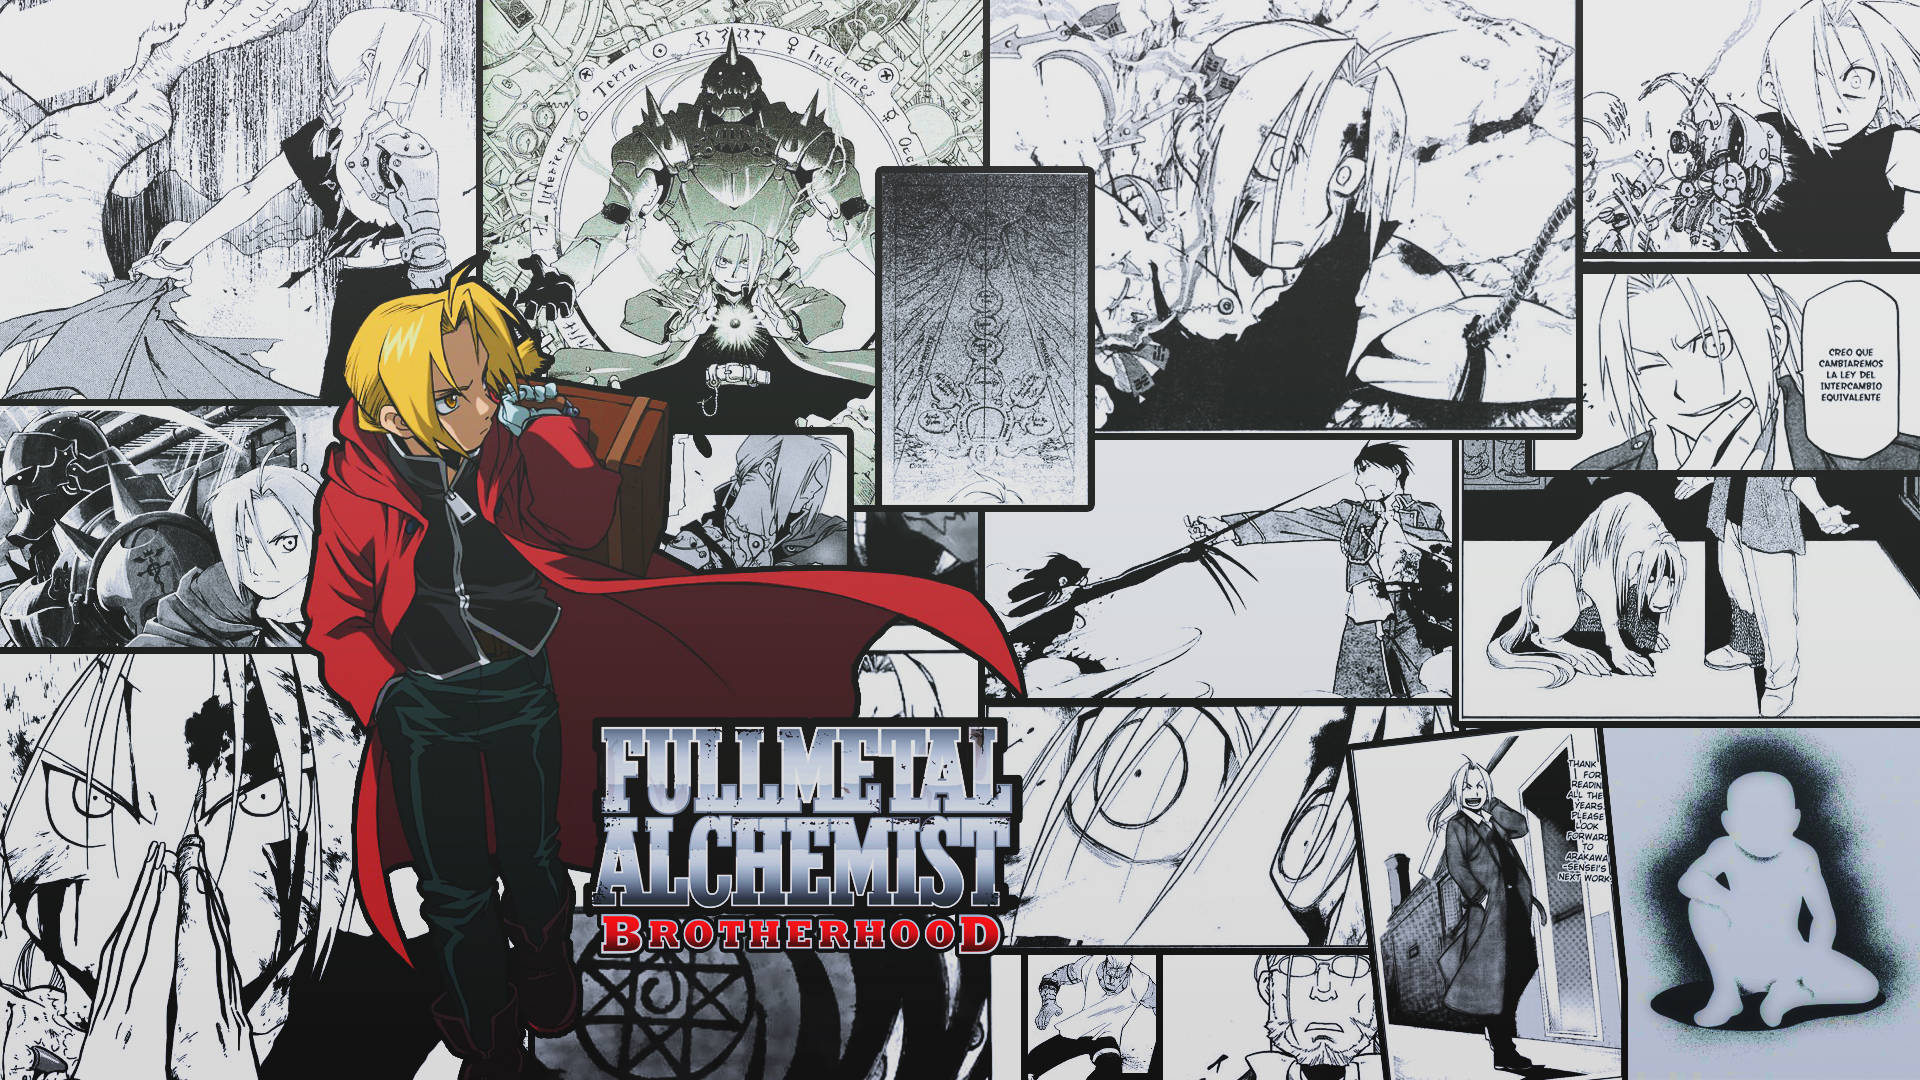 Fullmetal Alchemist Brotherhood 1920X1080 Wallpaper and Background Image